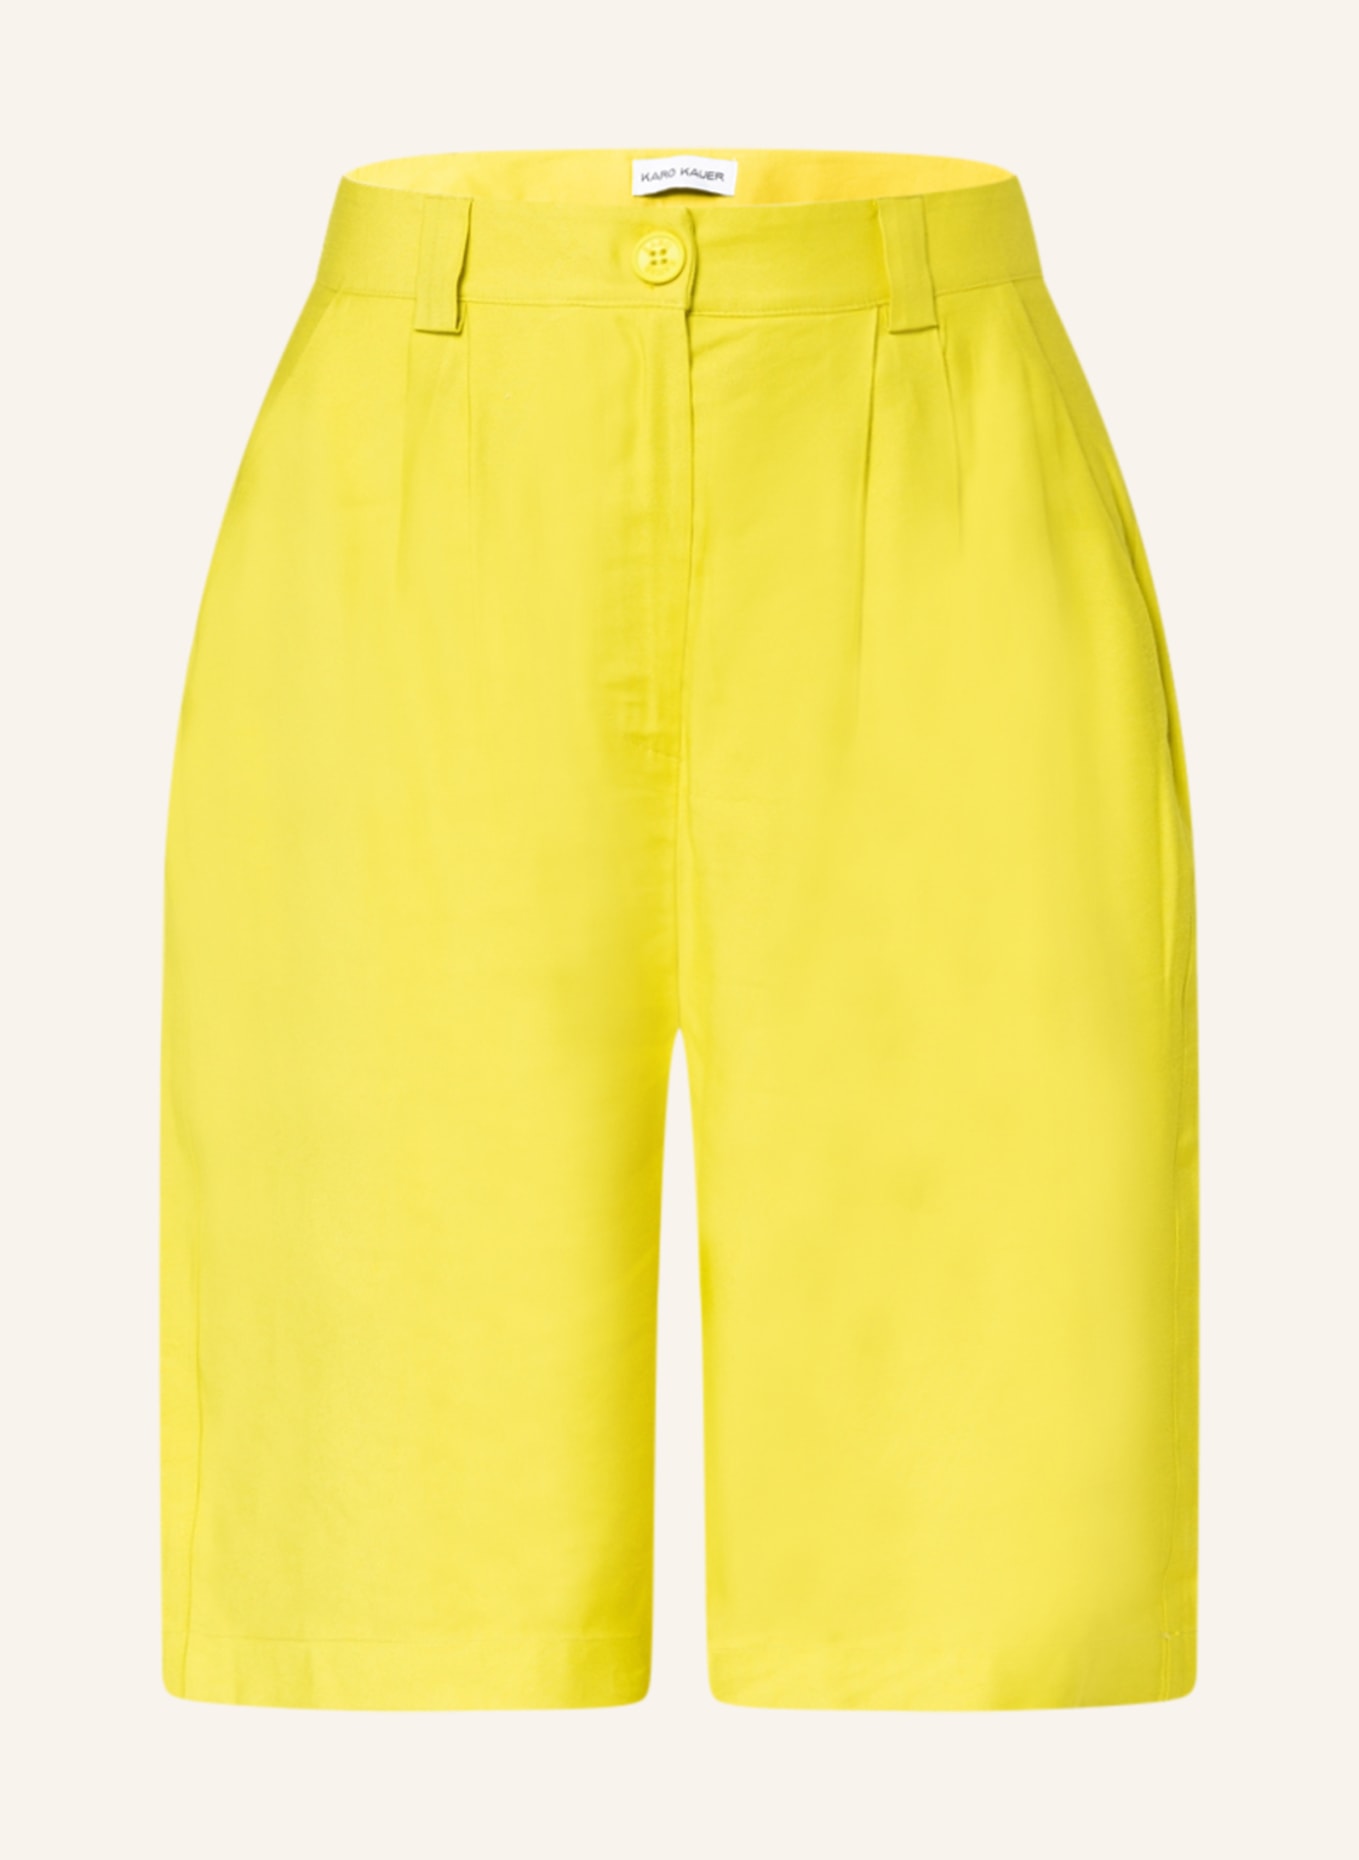 KARO KAUER Shorts , Farbe: NEONGELB (Bild 1)